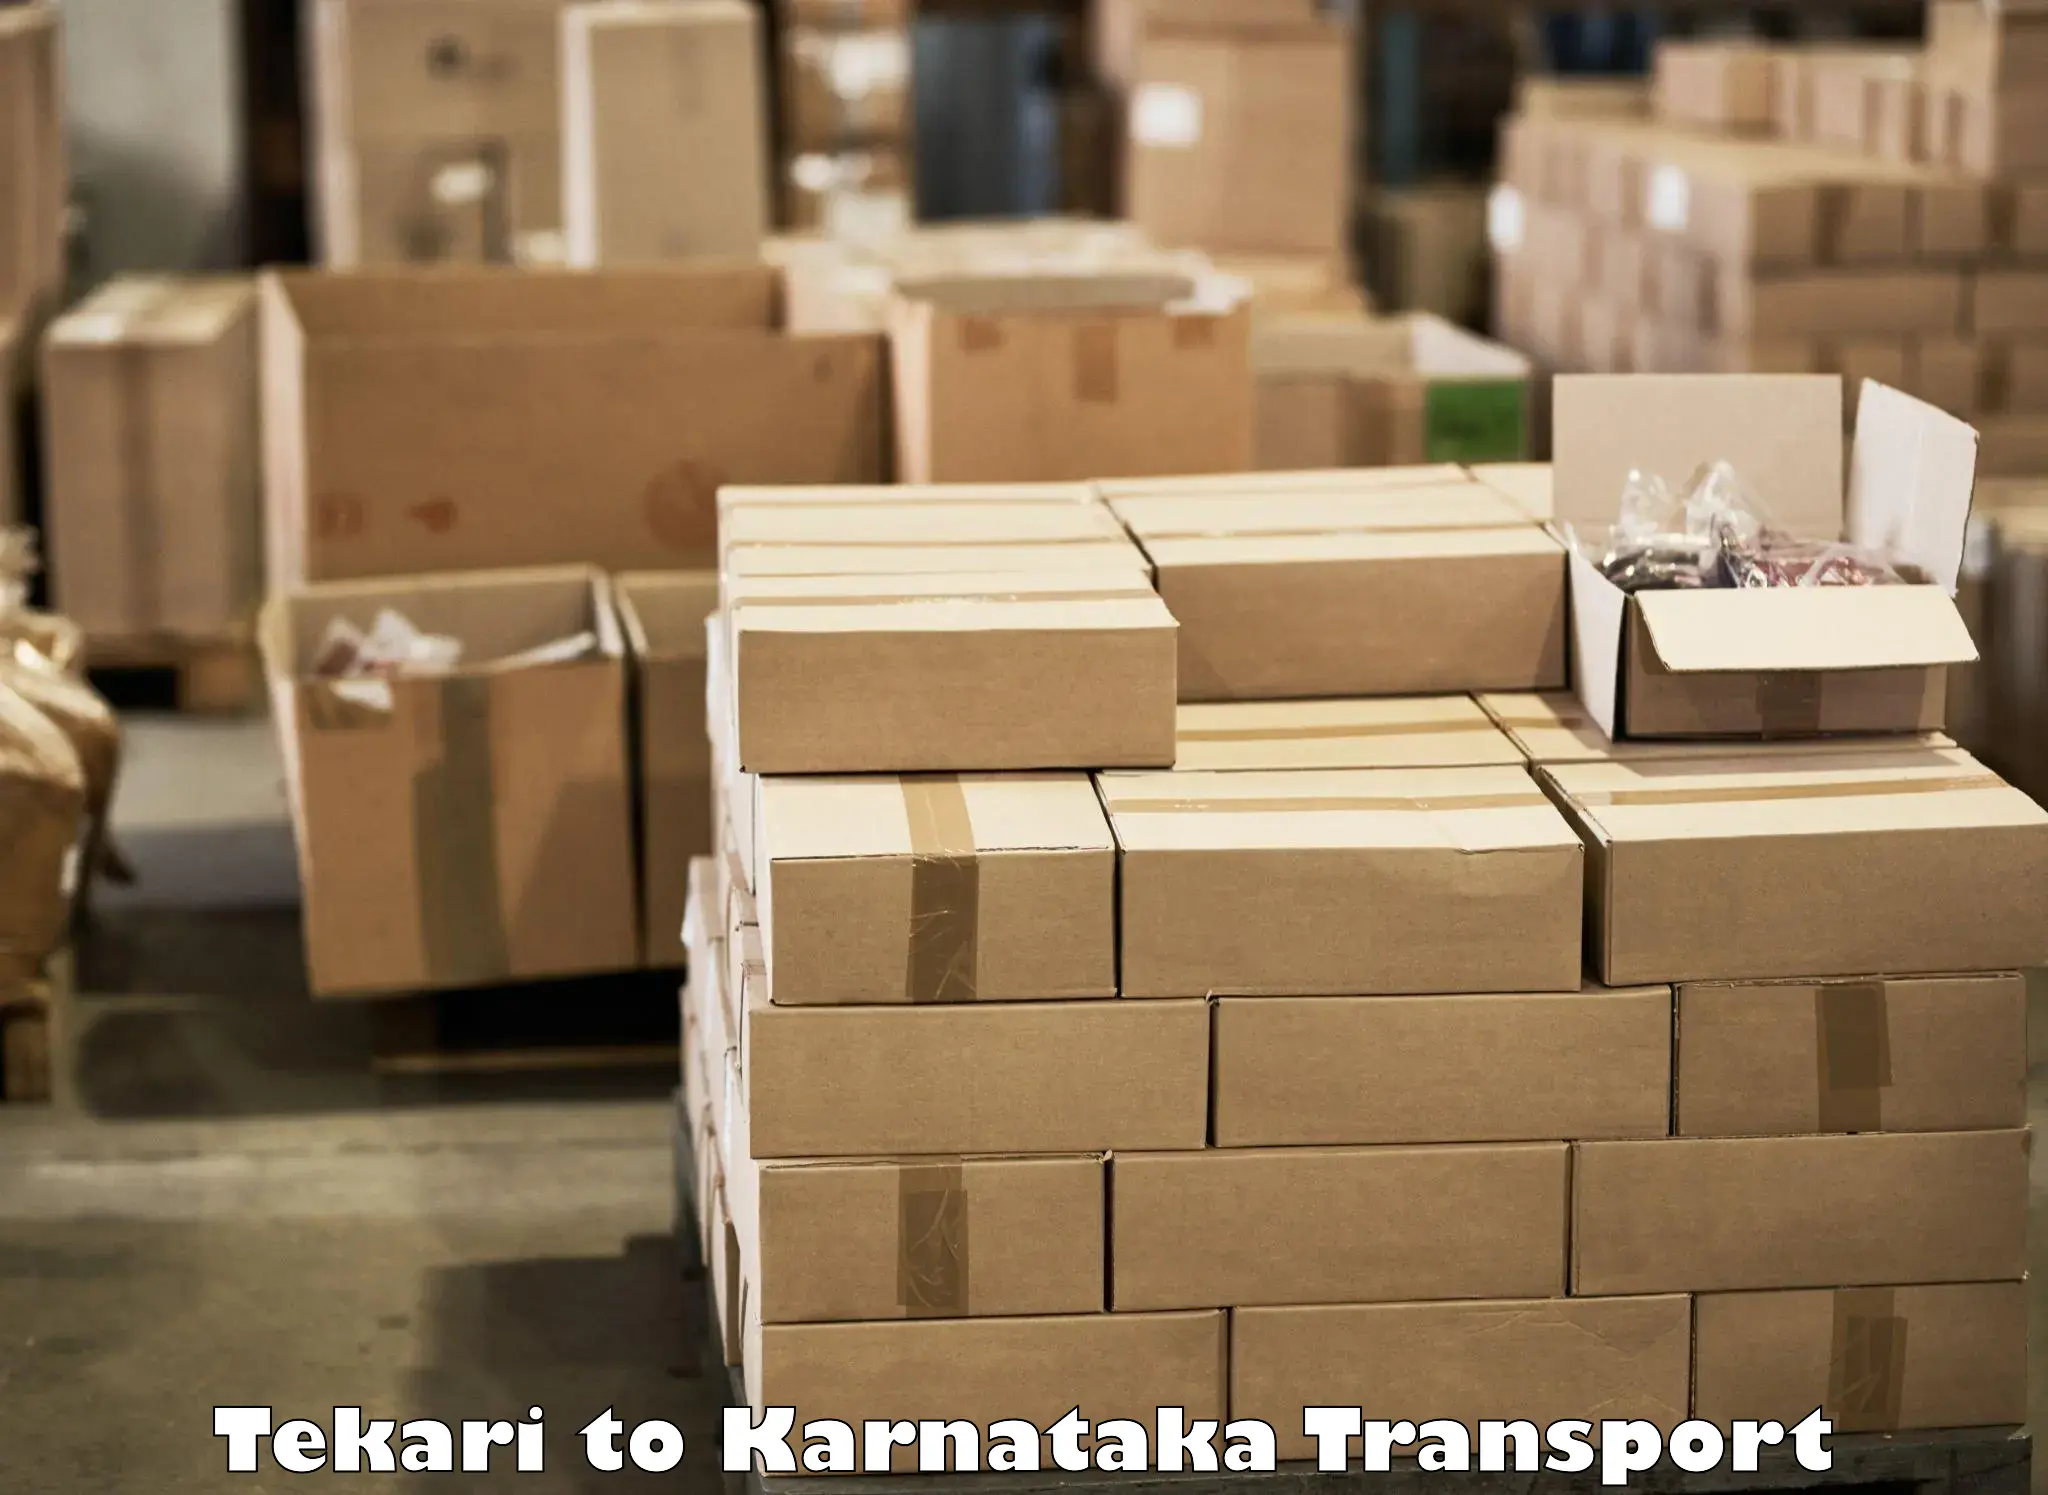 Best transport services in India Tekari to Karnataka